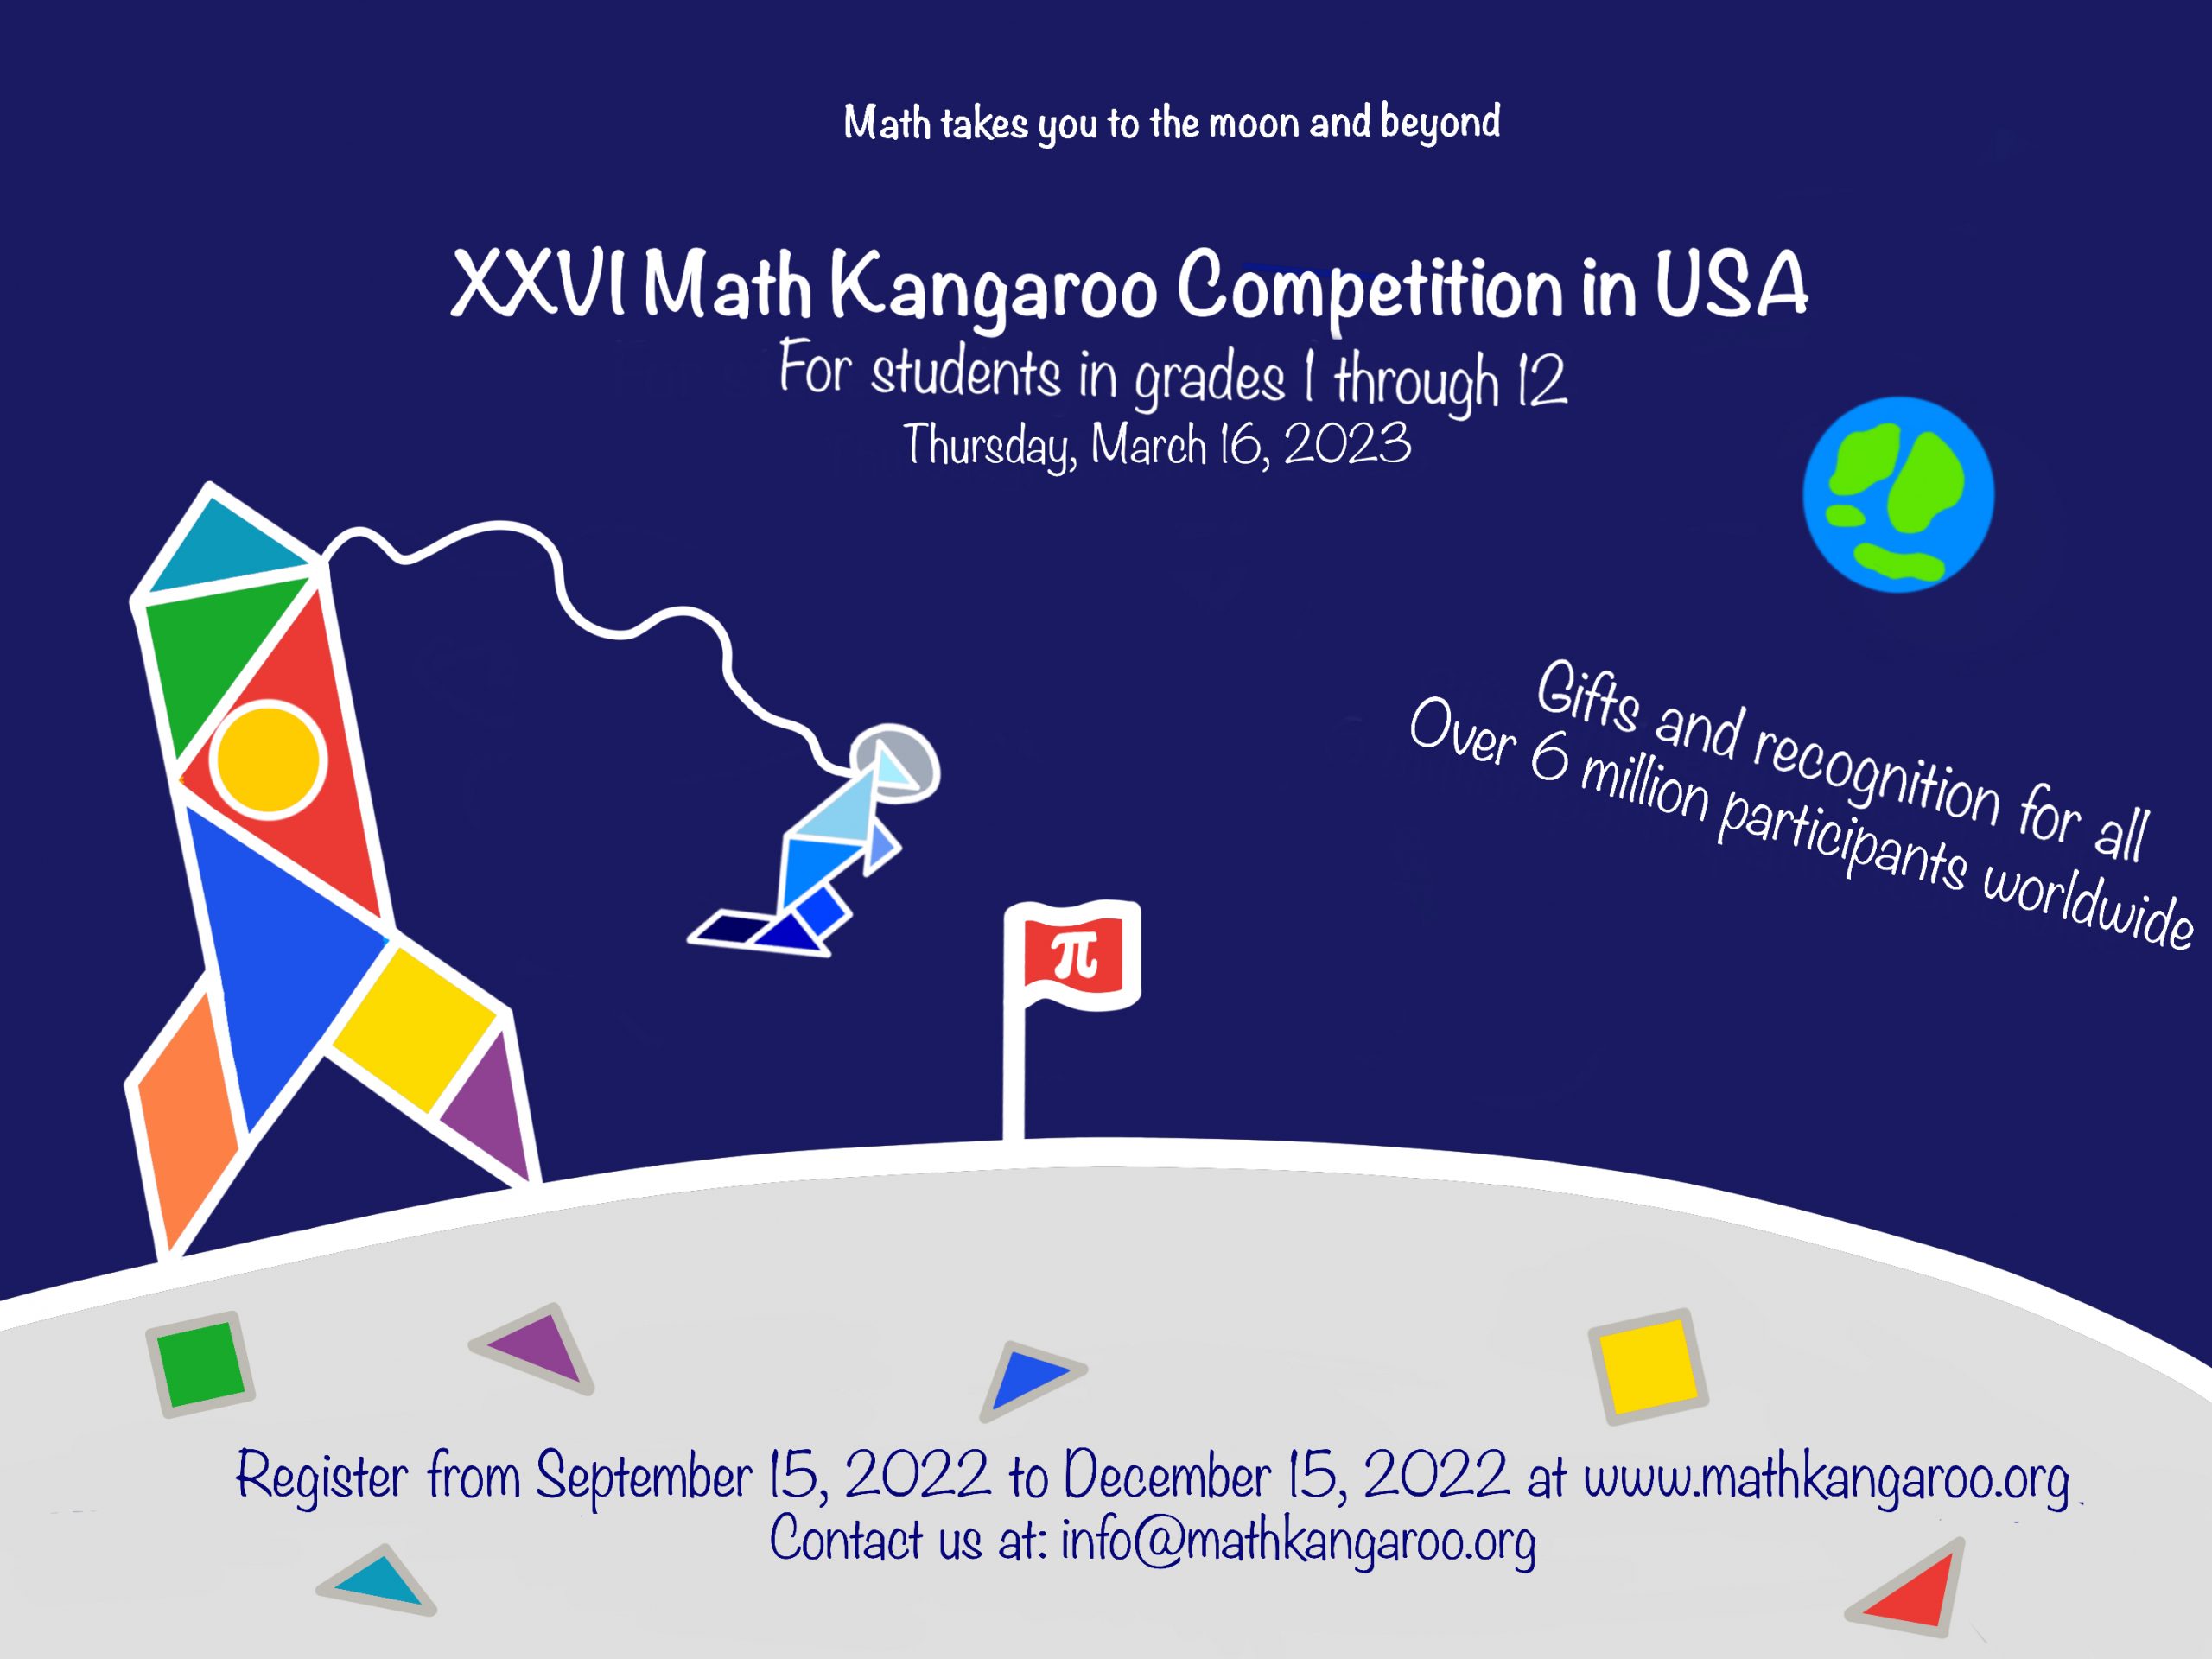 Math Kangaroo USA International Math Competition